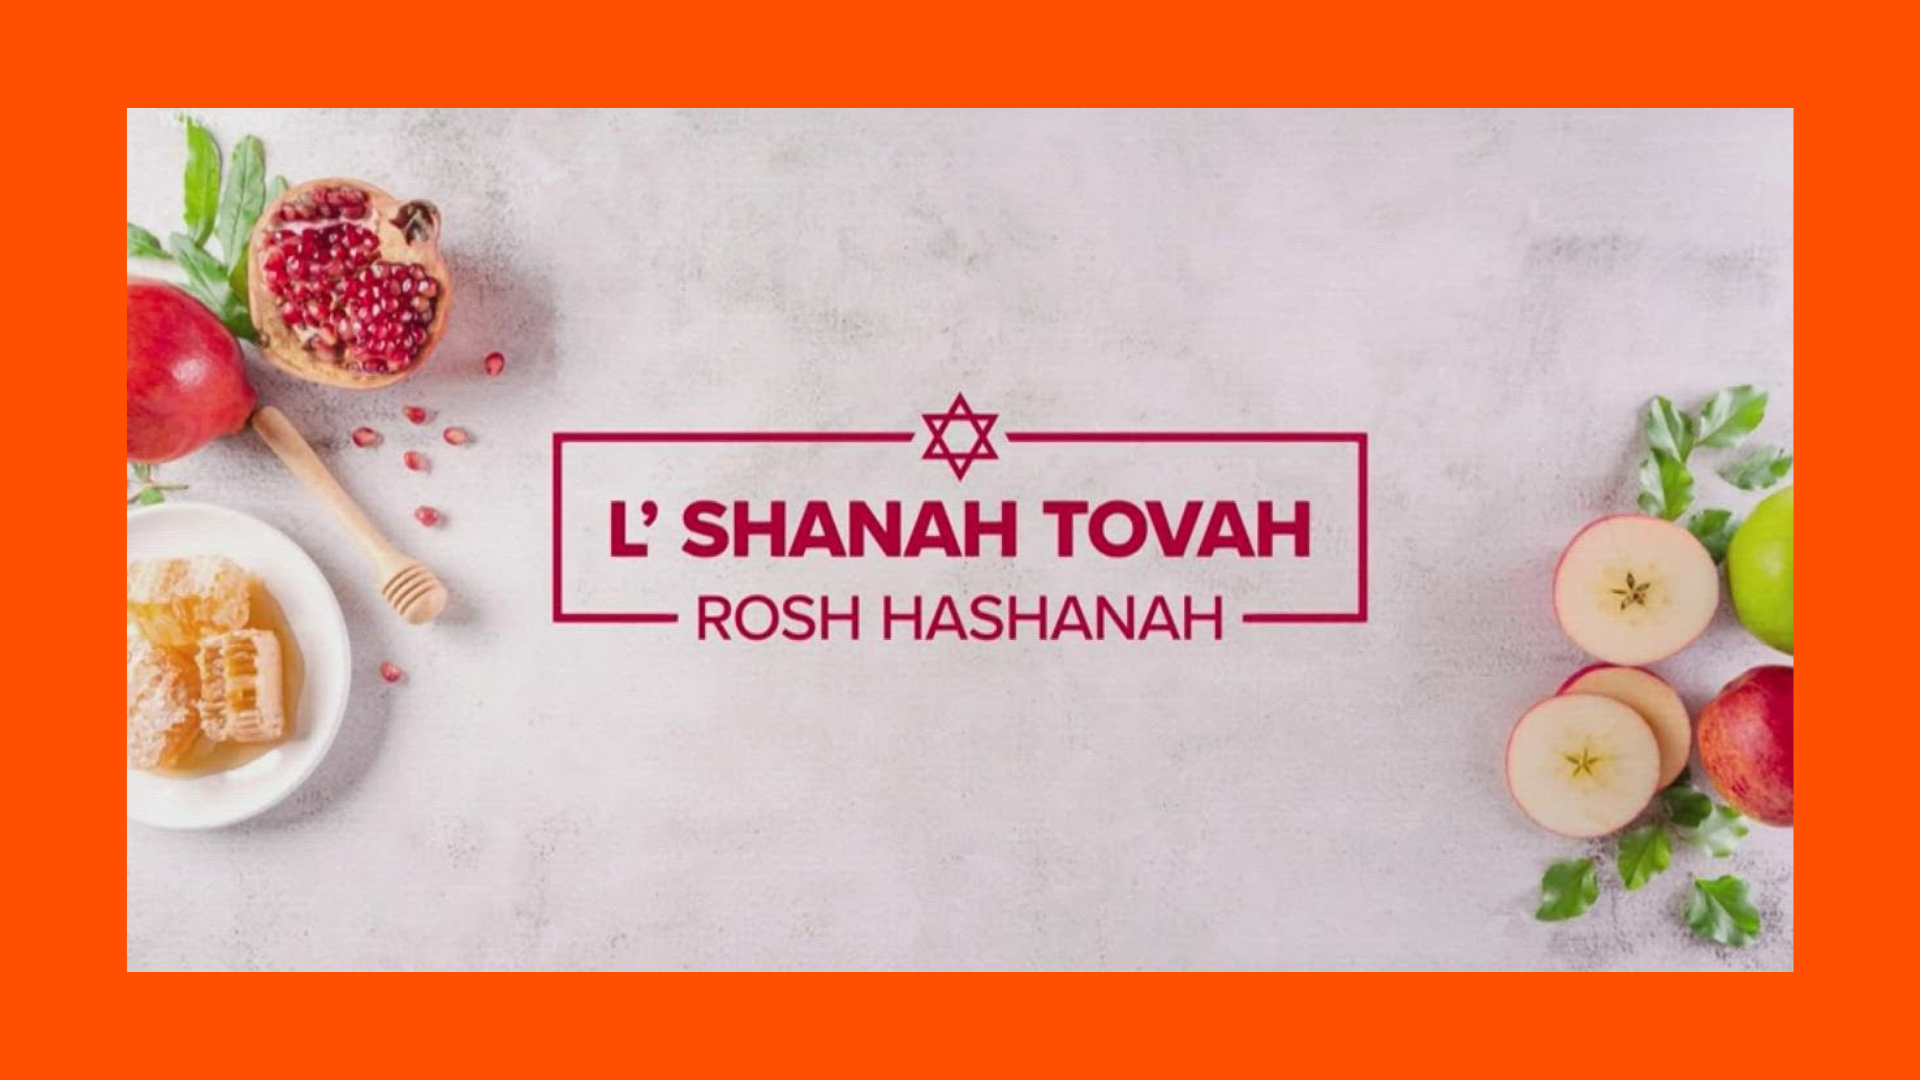 RoshHashanah | Blessings |  RoshHashanah2023 | JewishNewYear | Renewal |  MeaningfulGreetings | Traditions | ShanahTovah |  HighHolyDays | JewishCulture | SpiritualRenewal | SpiritualReflection | RoshHashanahGreetings | HolidayCelebration | FamilyGatherings |